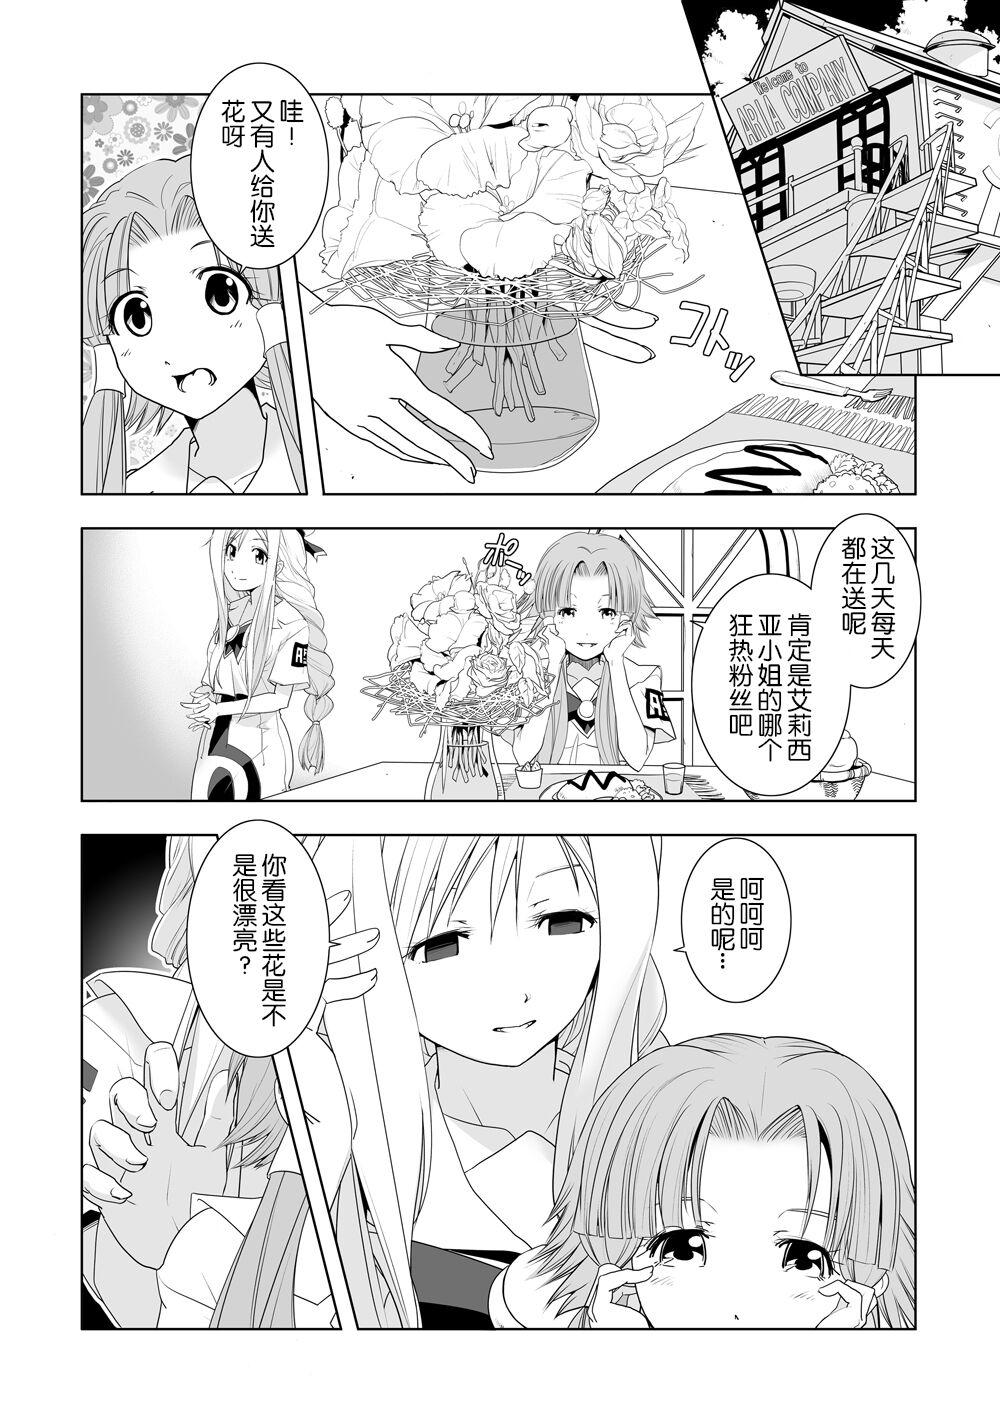 Weird AR*A Mind-control Manga - Aria Amigos - Page 4